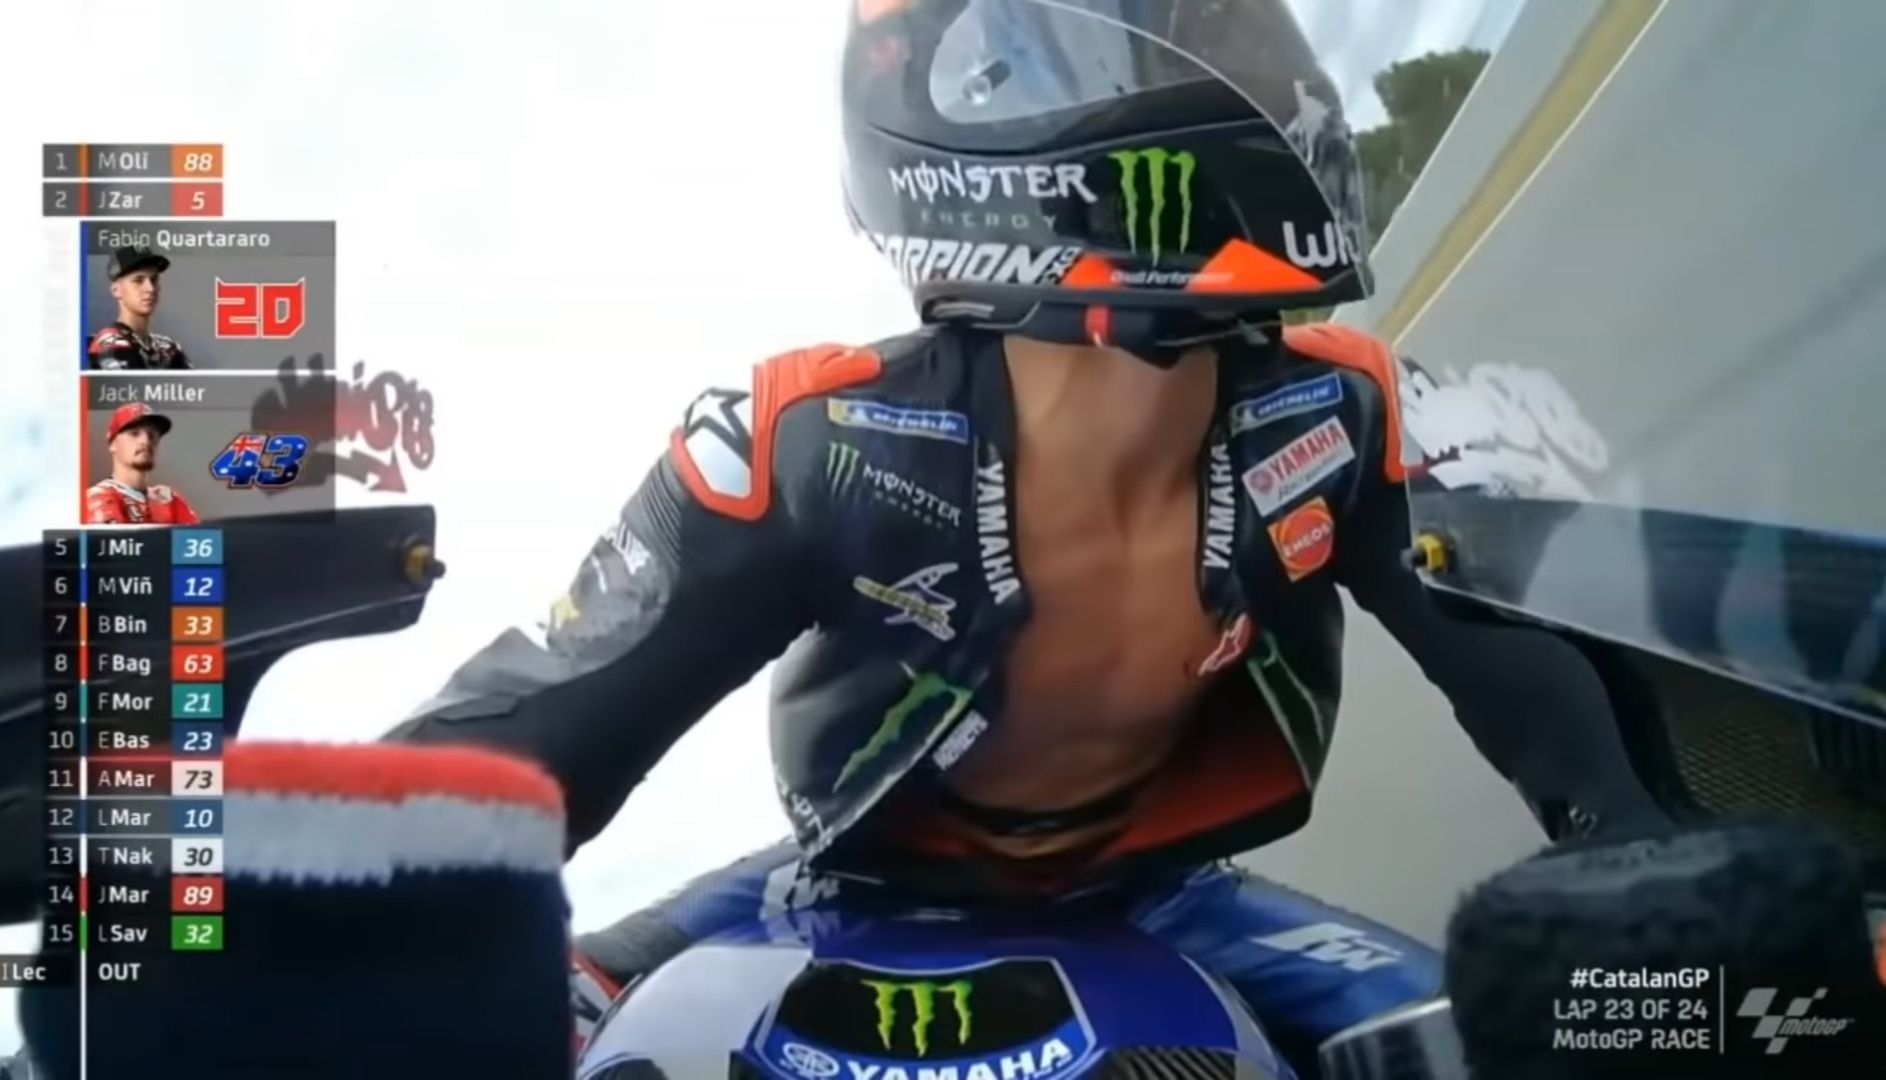 Fabio Quartararo telanjang dada saat balapan MotoGP